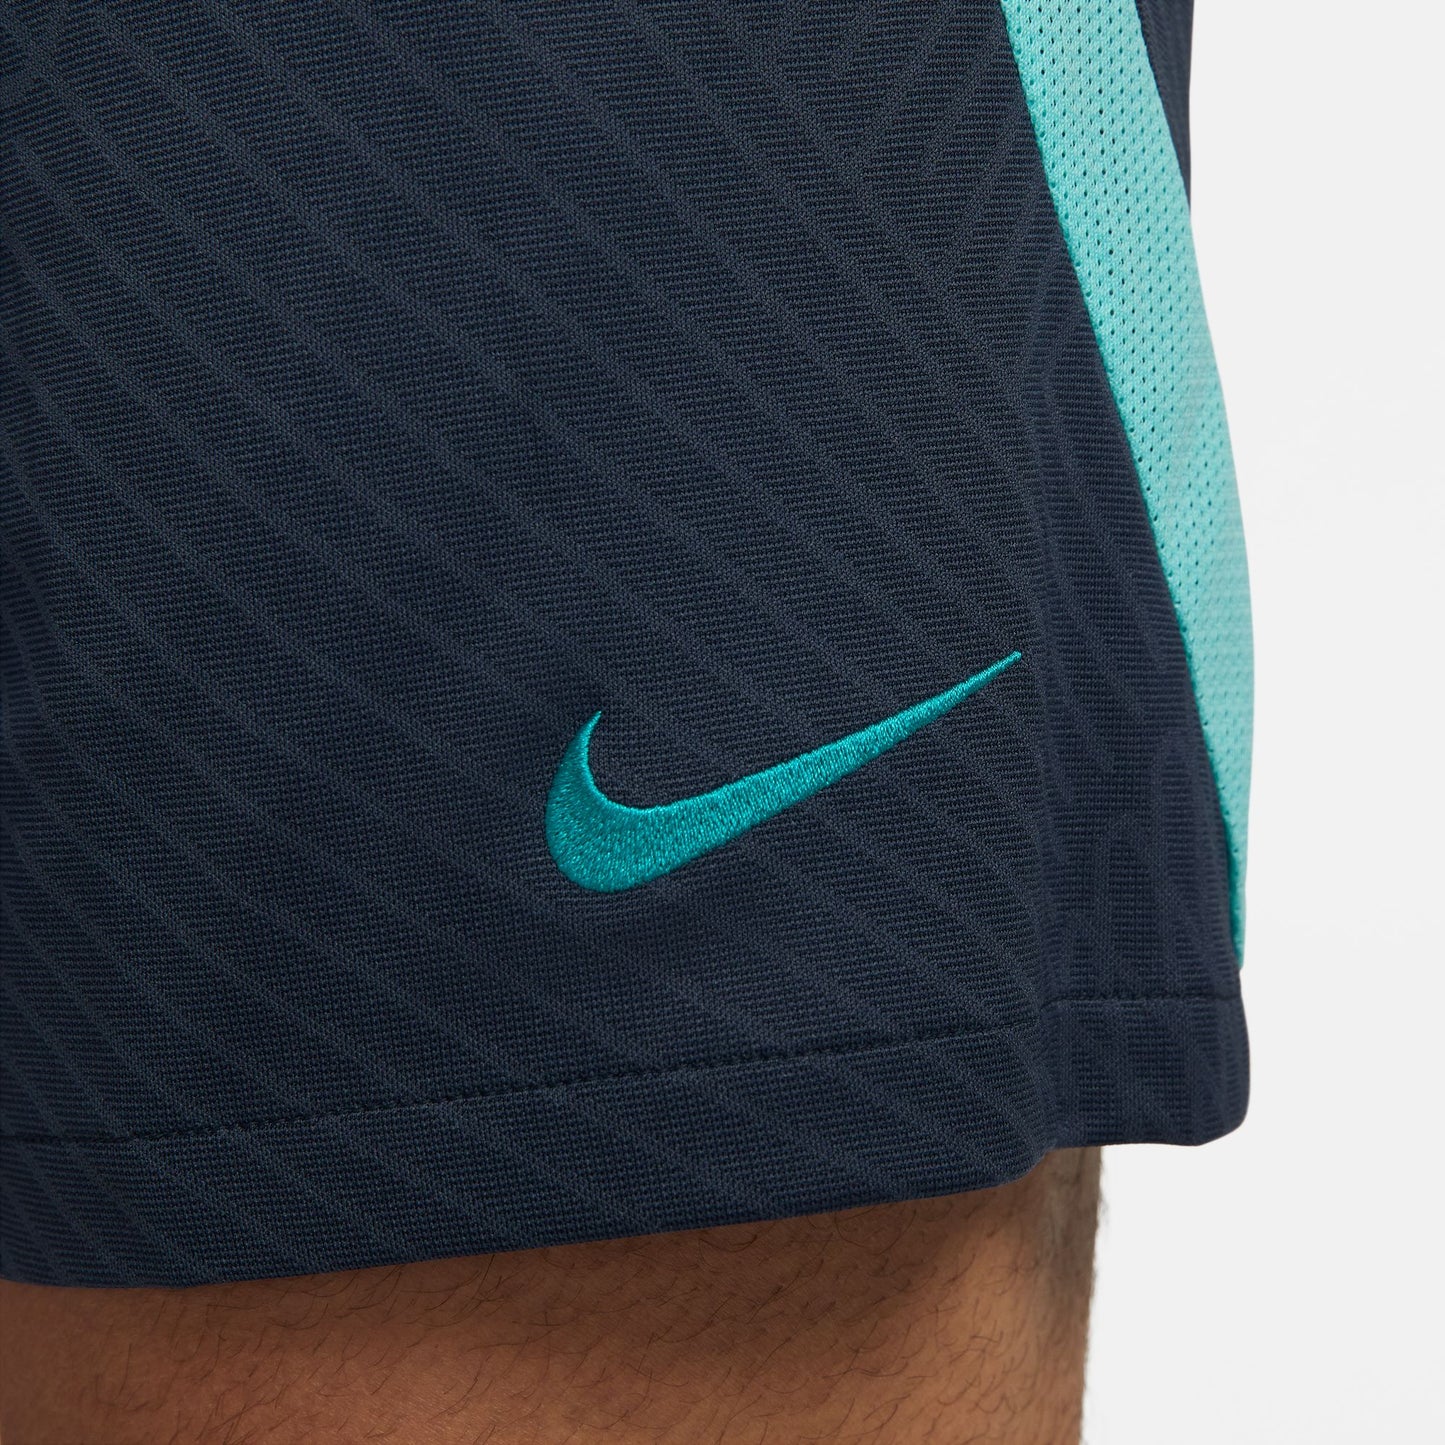 FC Barcelona Strike Third Straight Fit Nike Dri-FIT Knit Soccer Shorts6